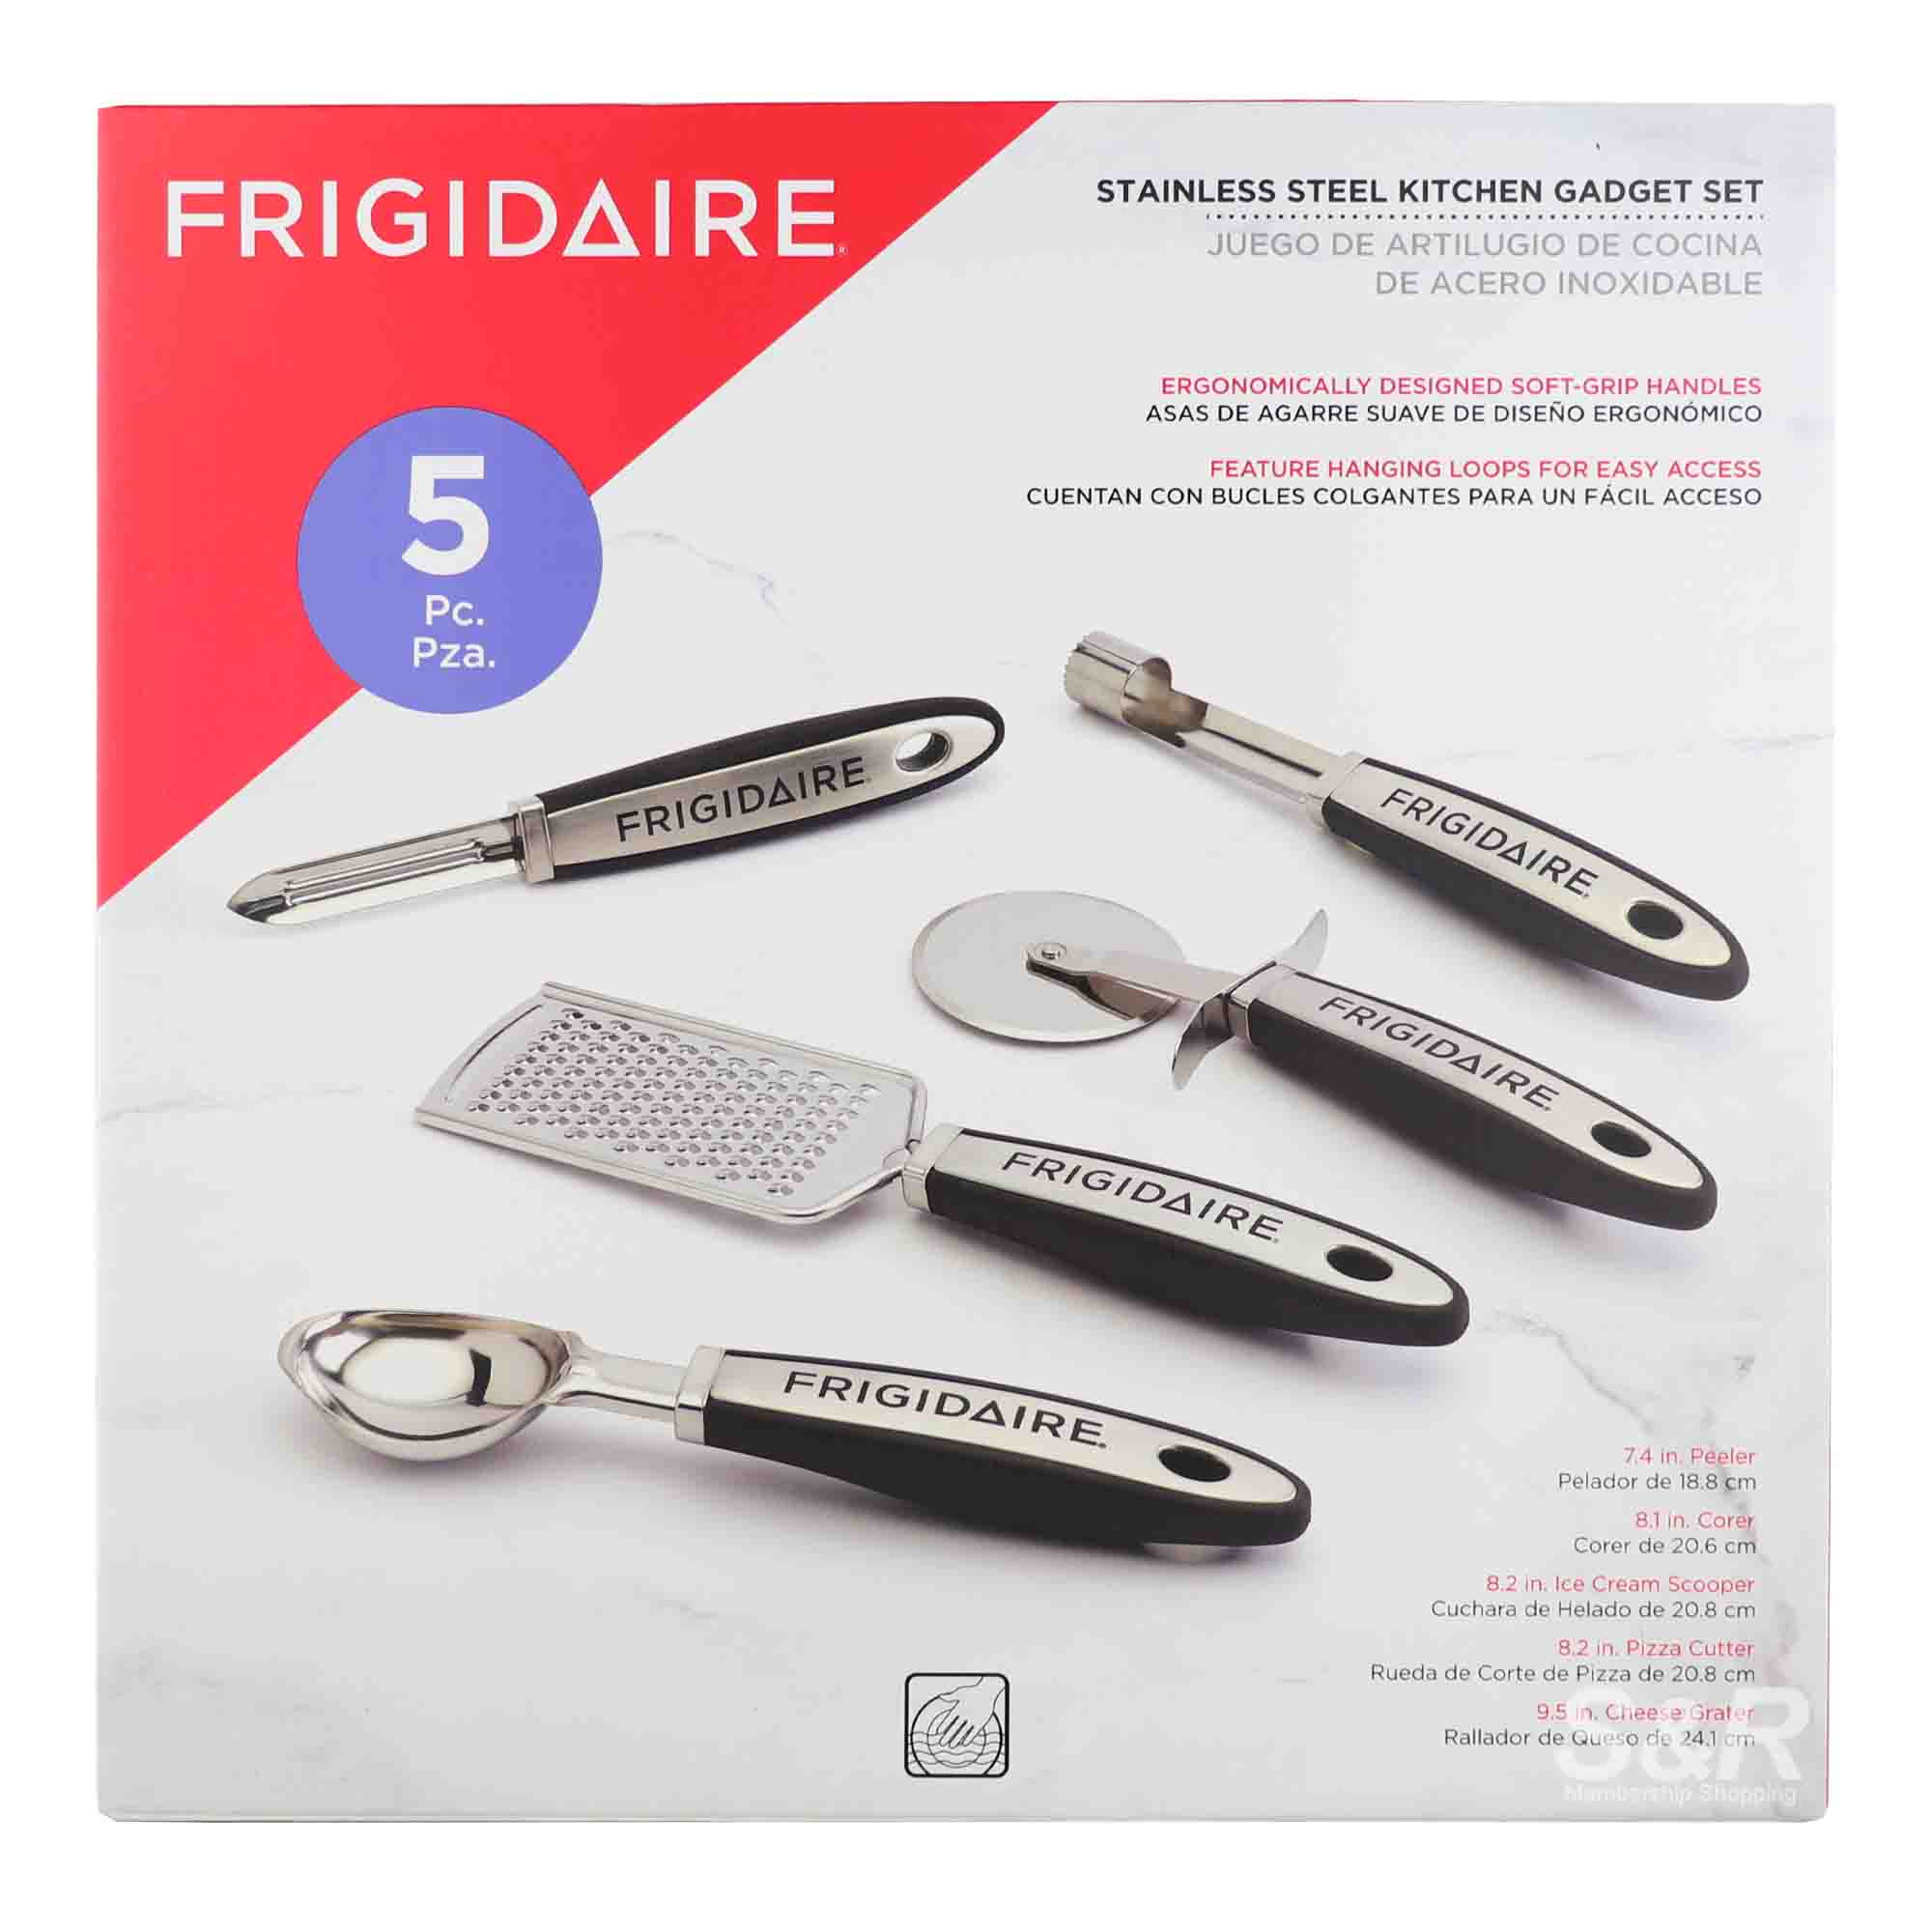 Frigidaire Stainless Steel Kitchen Gadget Set 5pcs